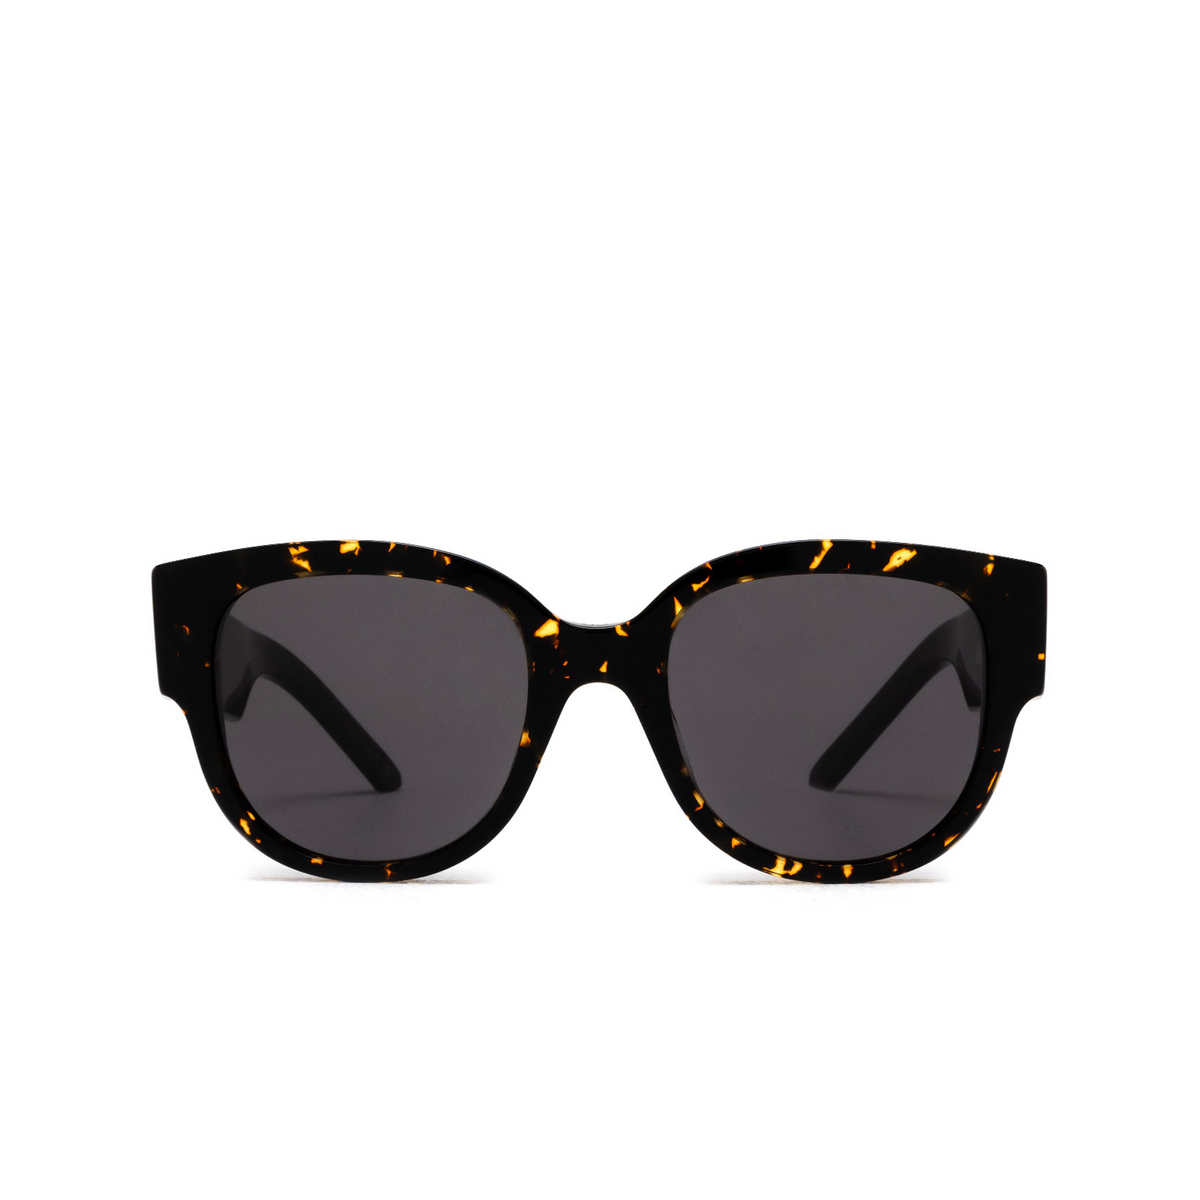 WILDIOR S3U Black Square Sunglasses